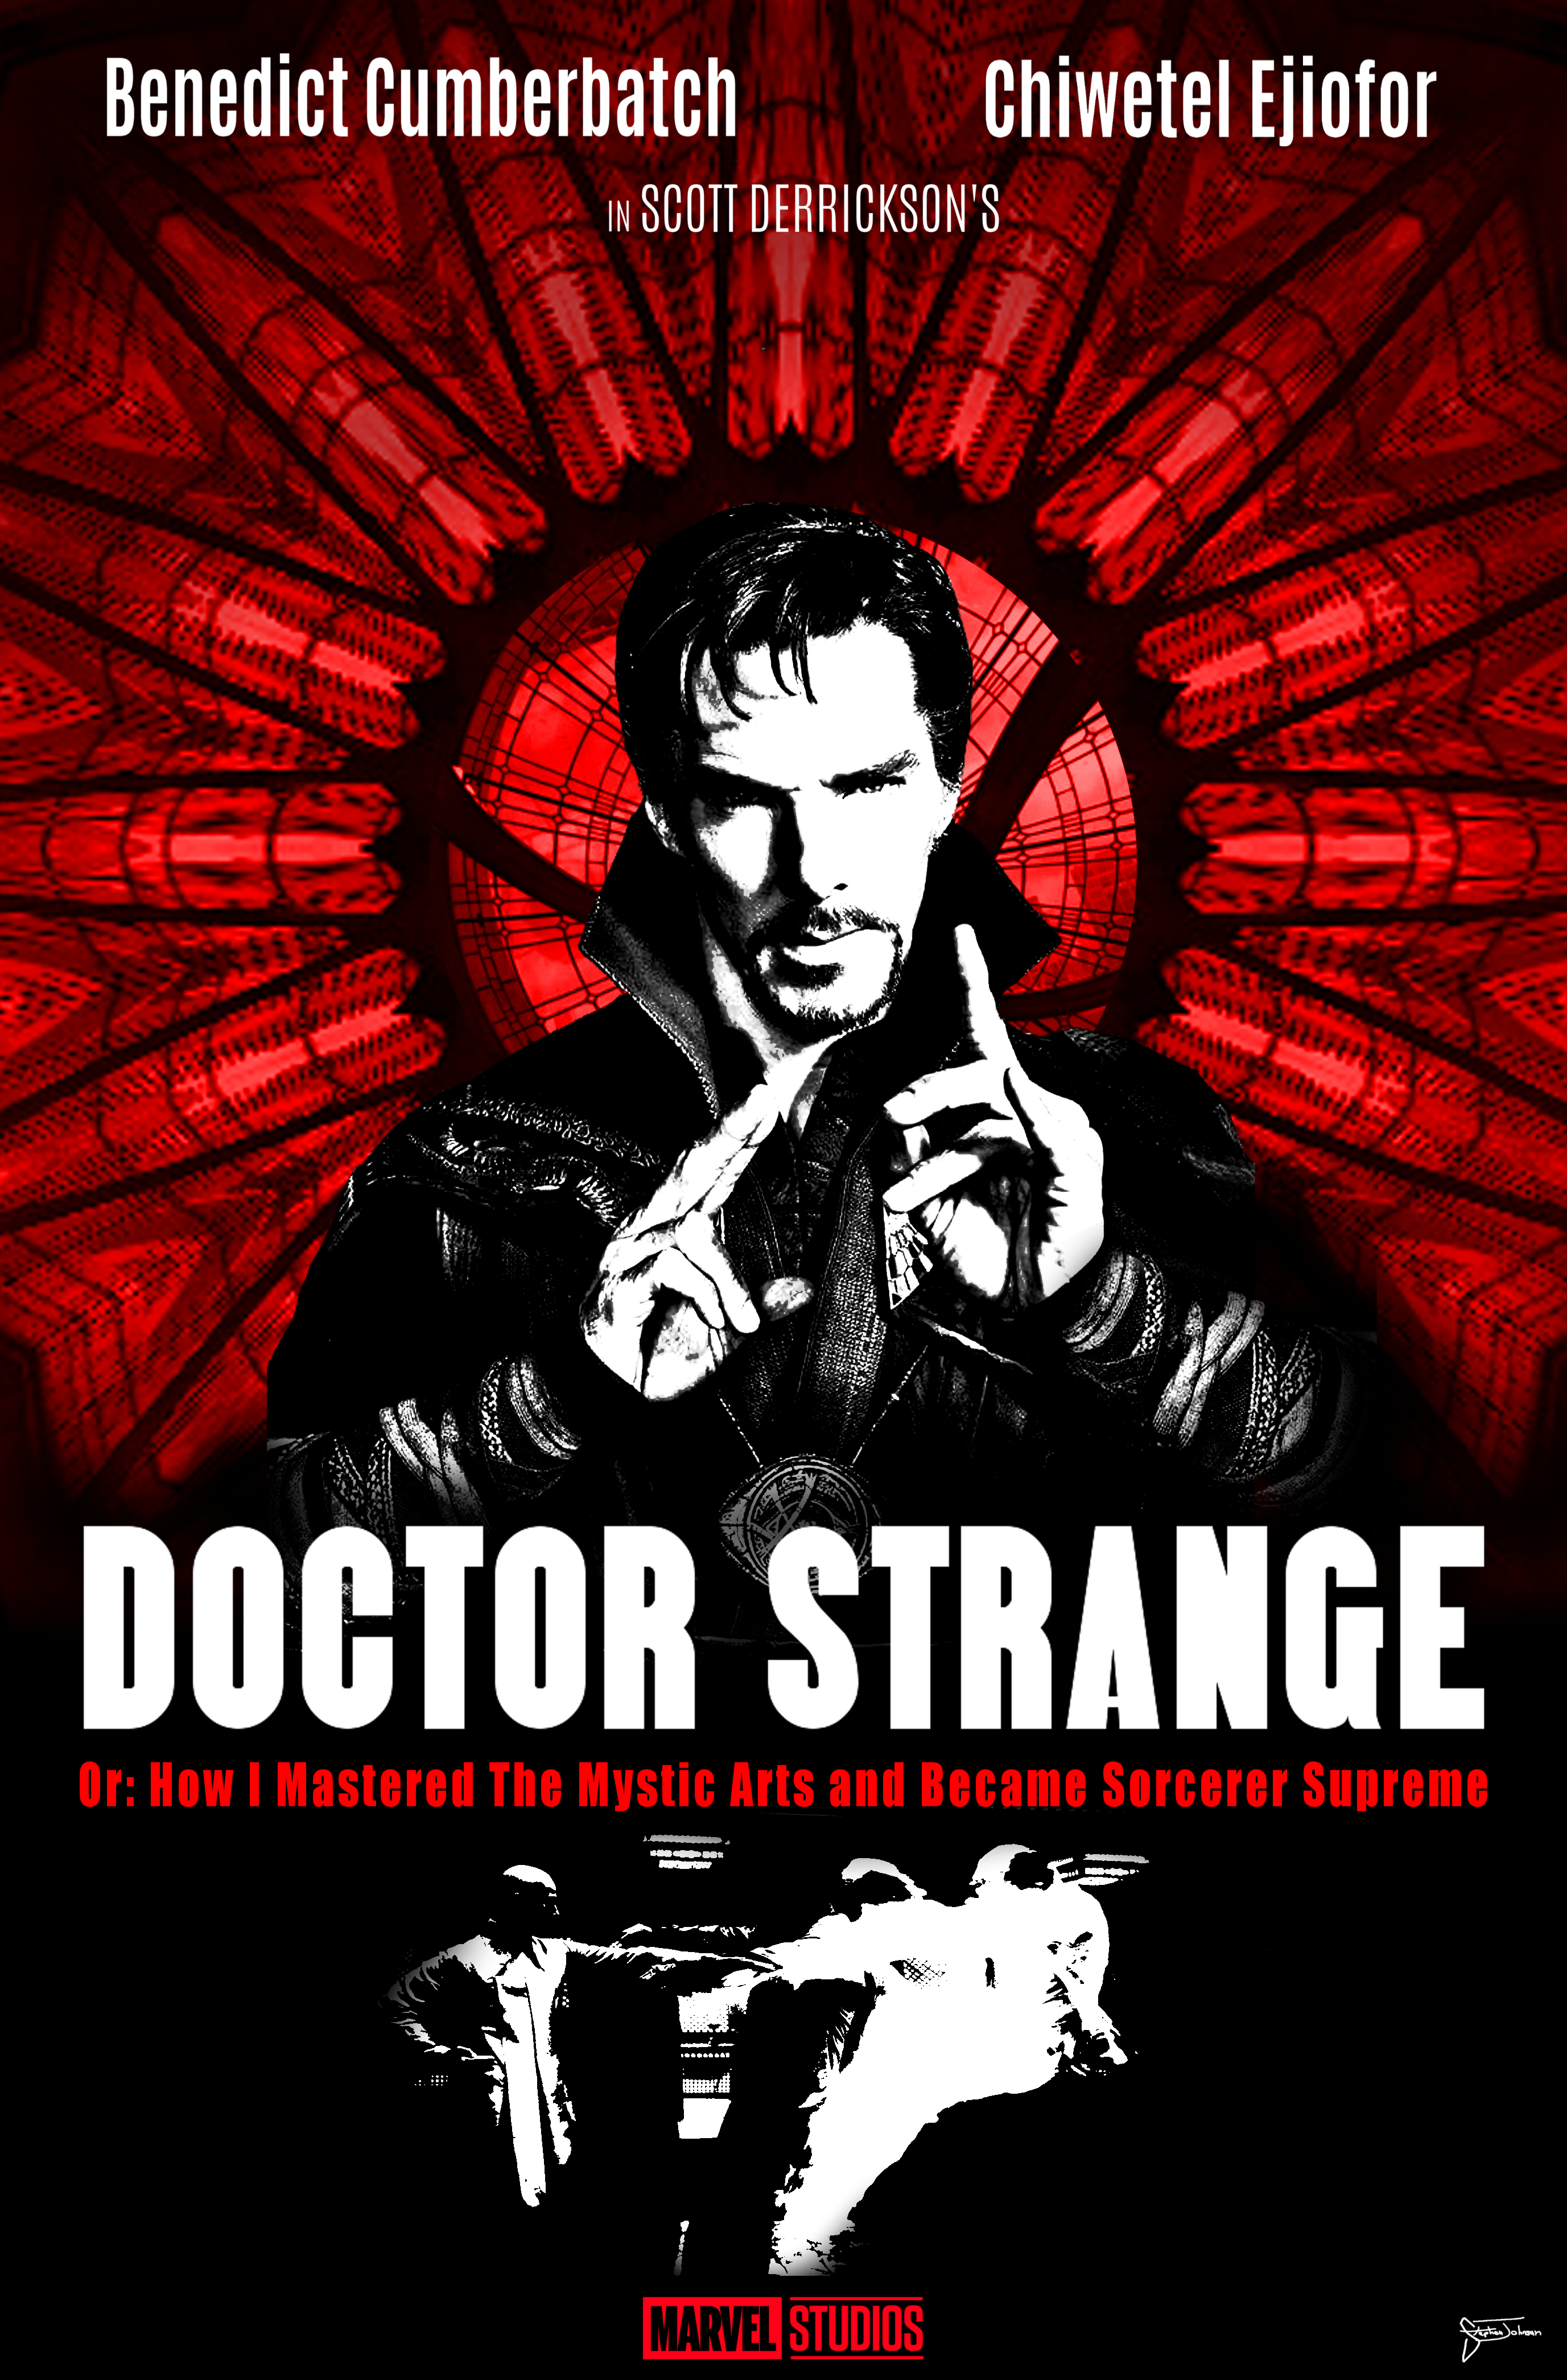 dr strangelove 바탕 화면,포스터,영화,앨범 표지,폰트,광고하는